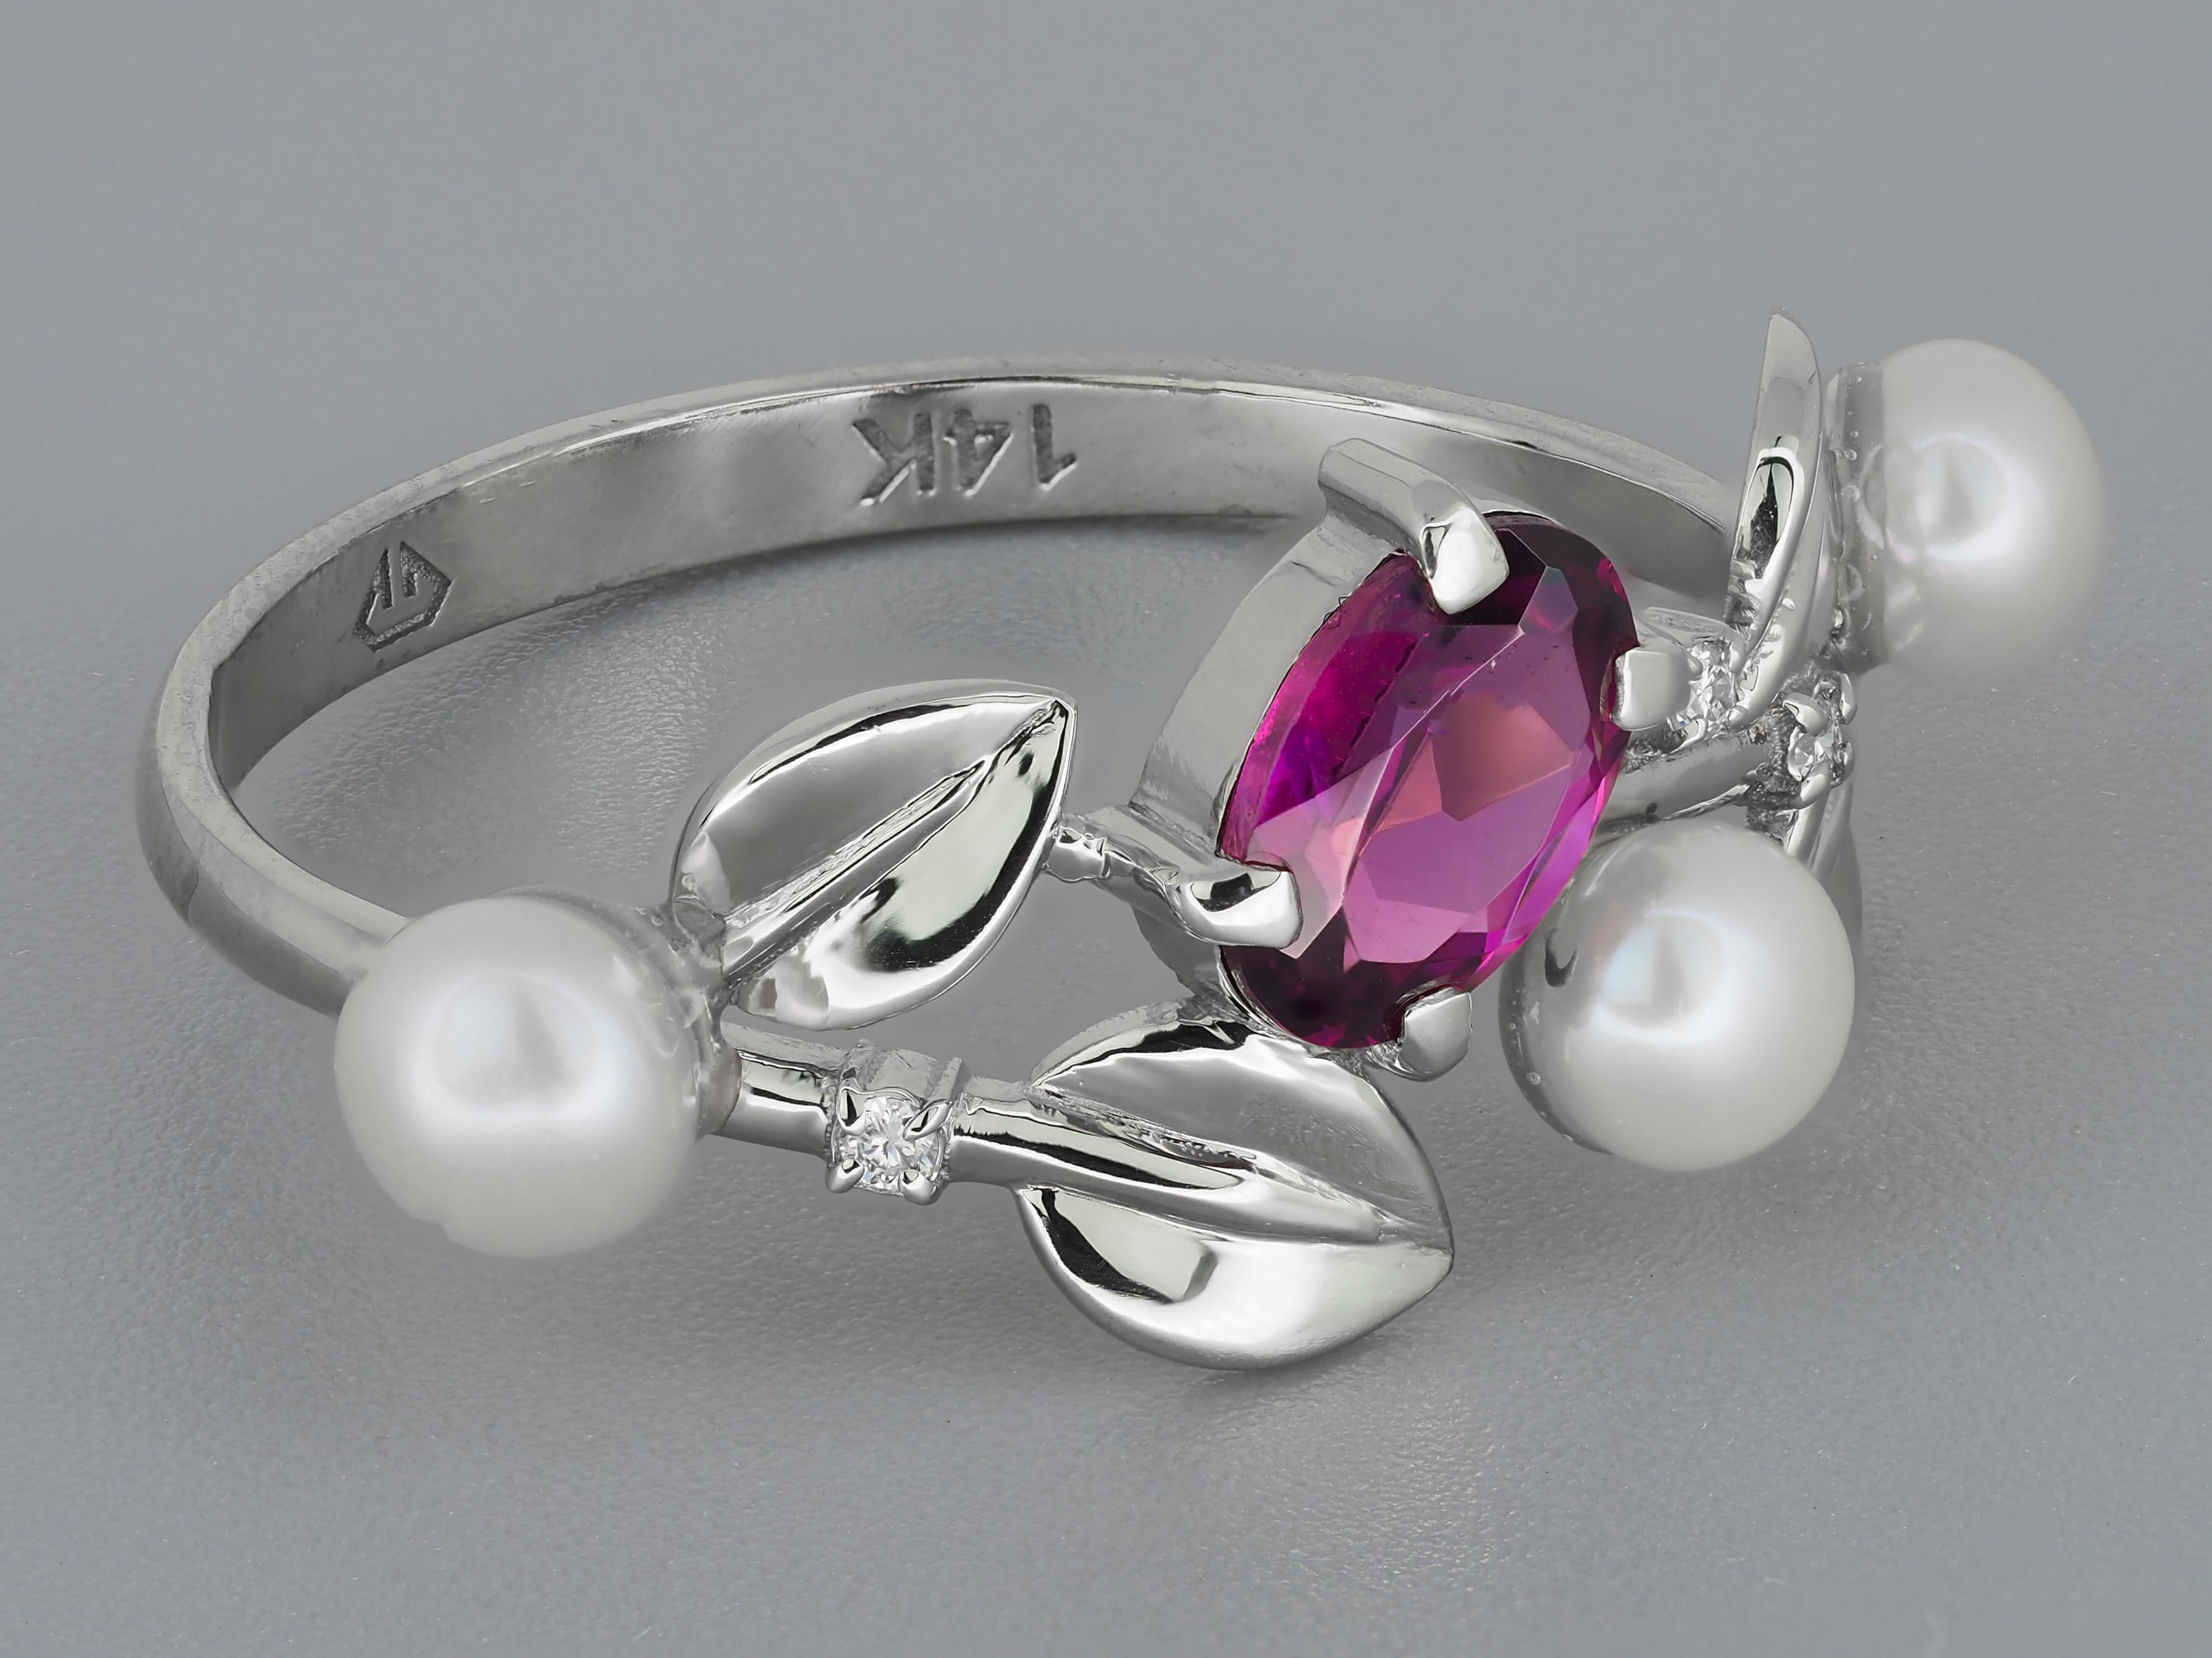 For Sale:  Garnet, pearls 14k gold ring. Gold leaves ring.  2